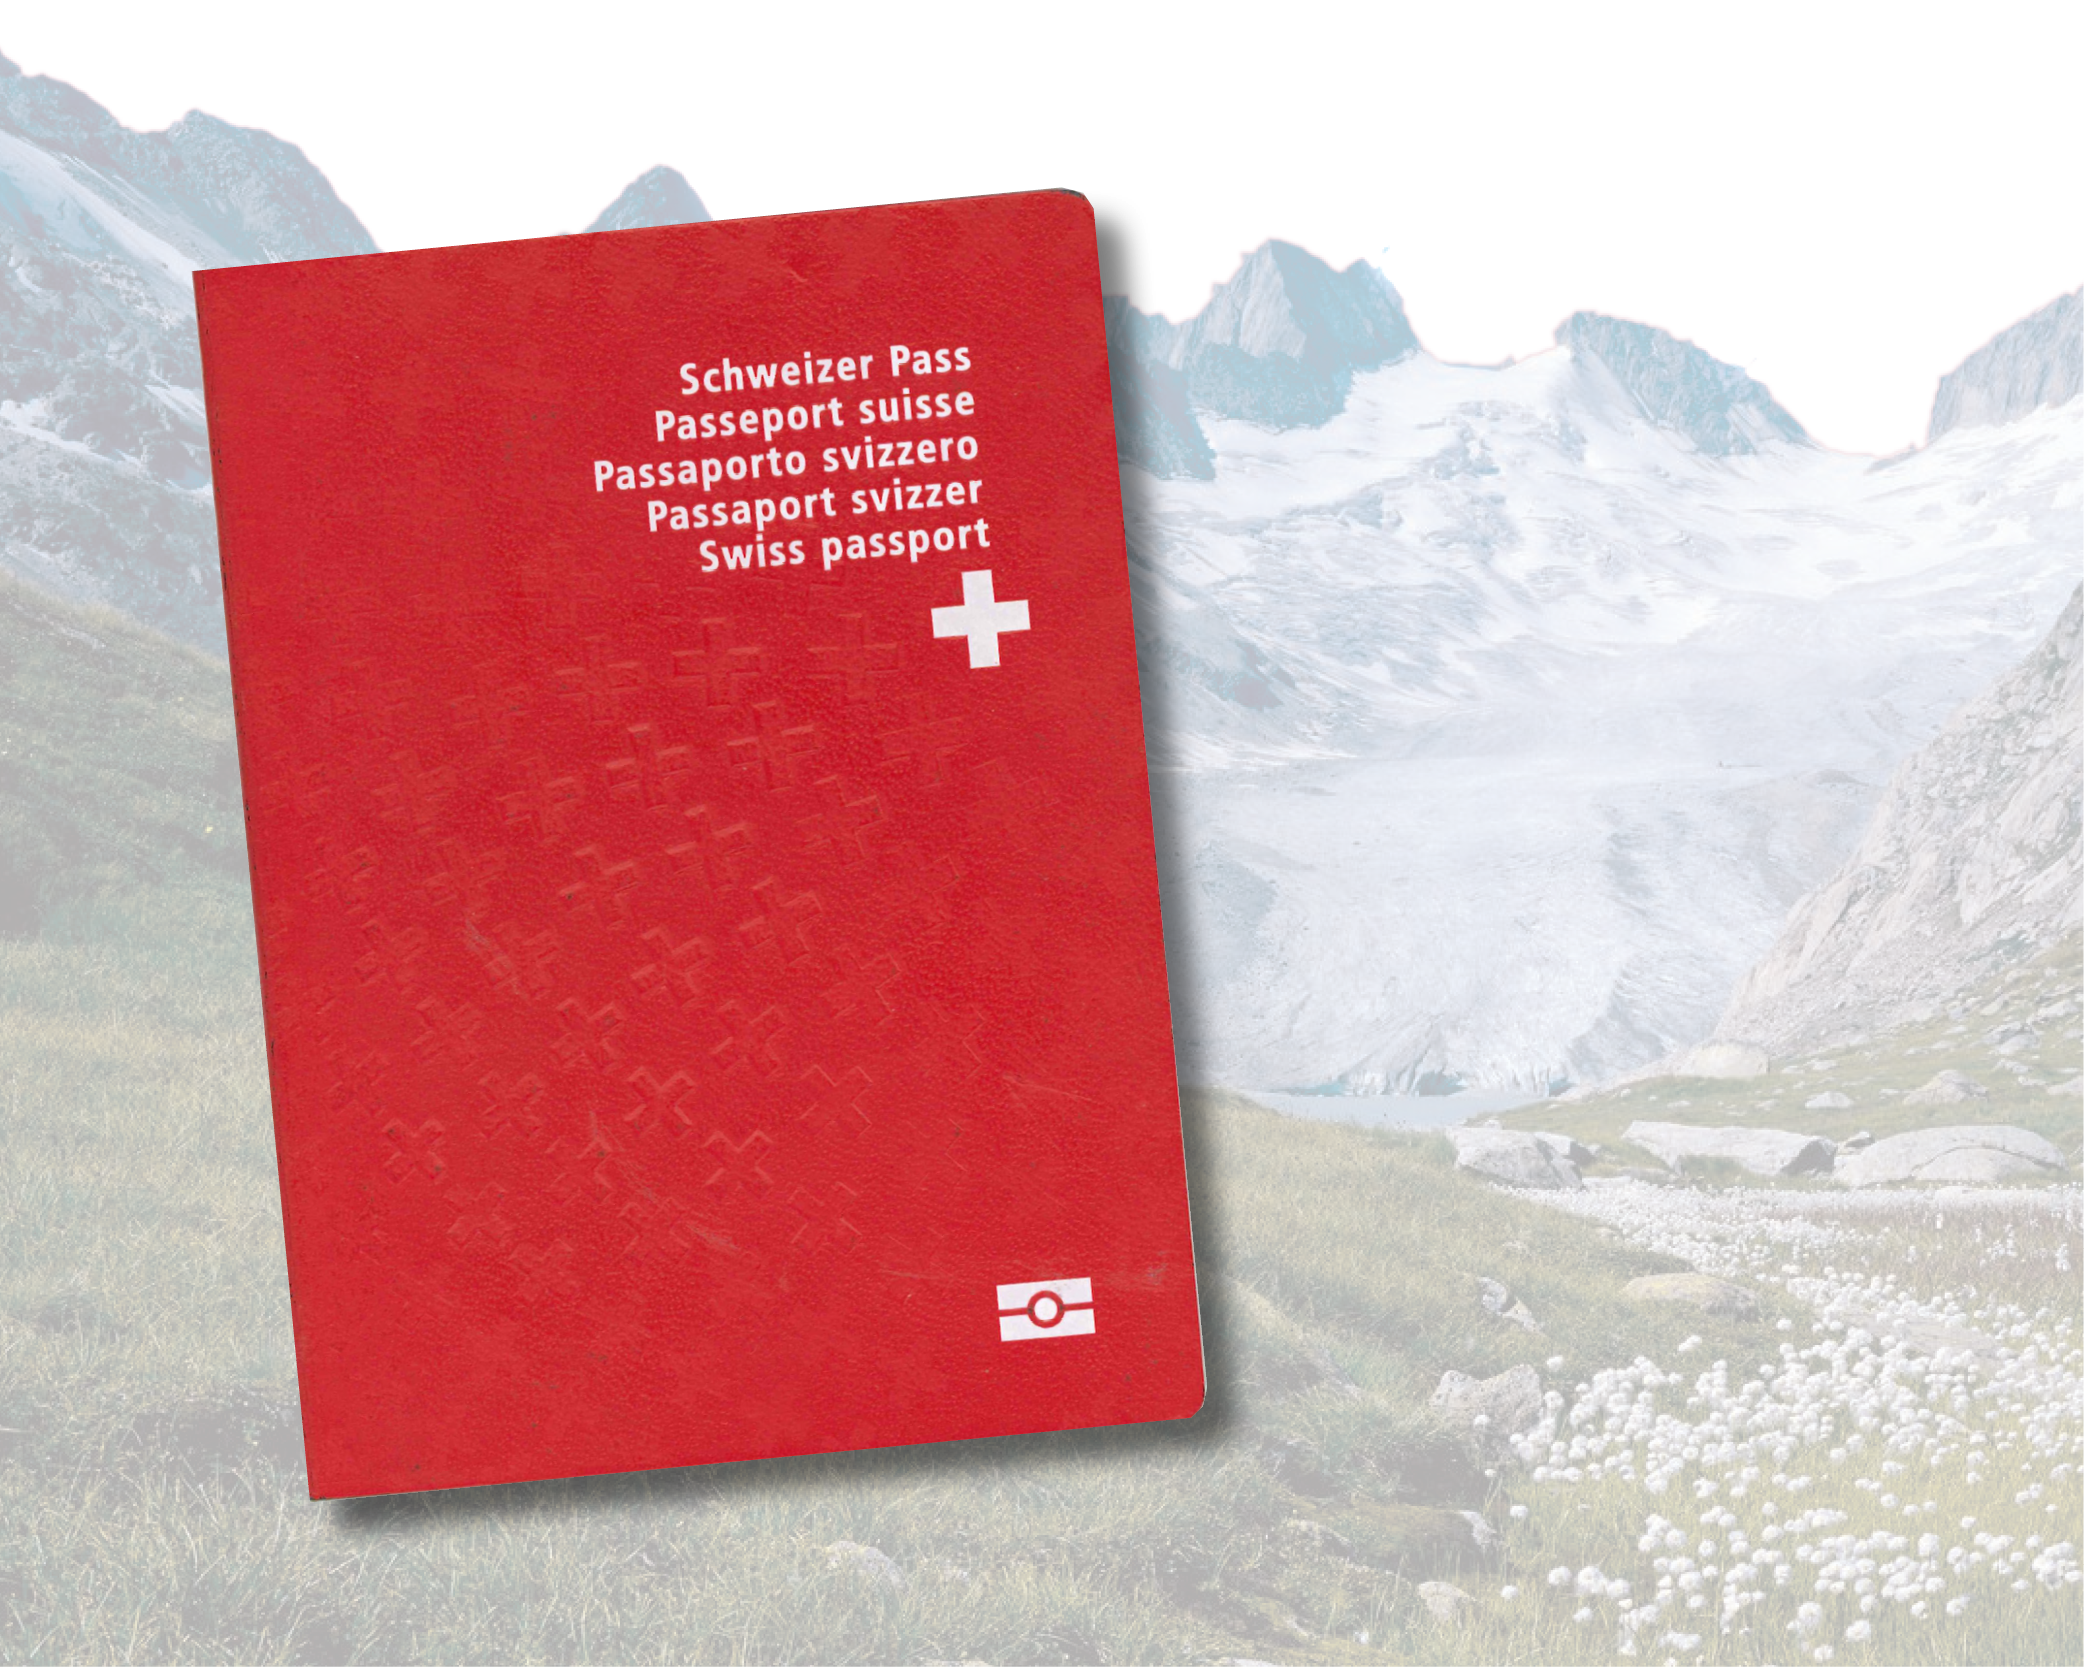 Vietnam Resume Tourist Visa For Switzerland People From March 2022 | Process To Apply Vietnam Tourist Visa From Switzerland 2022